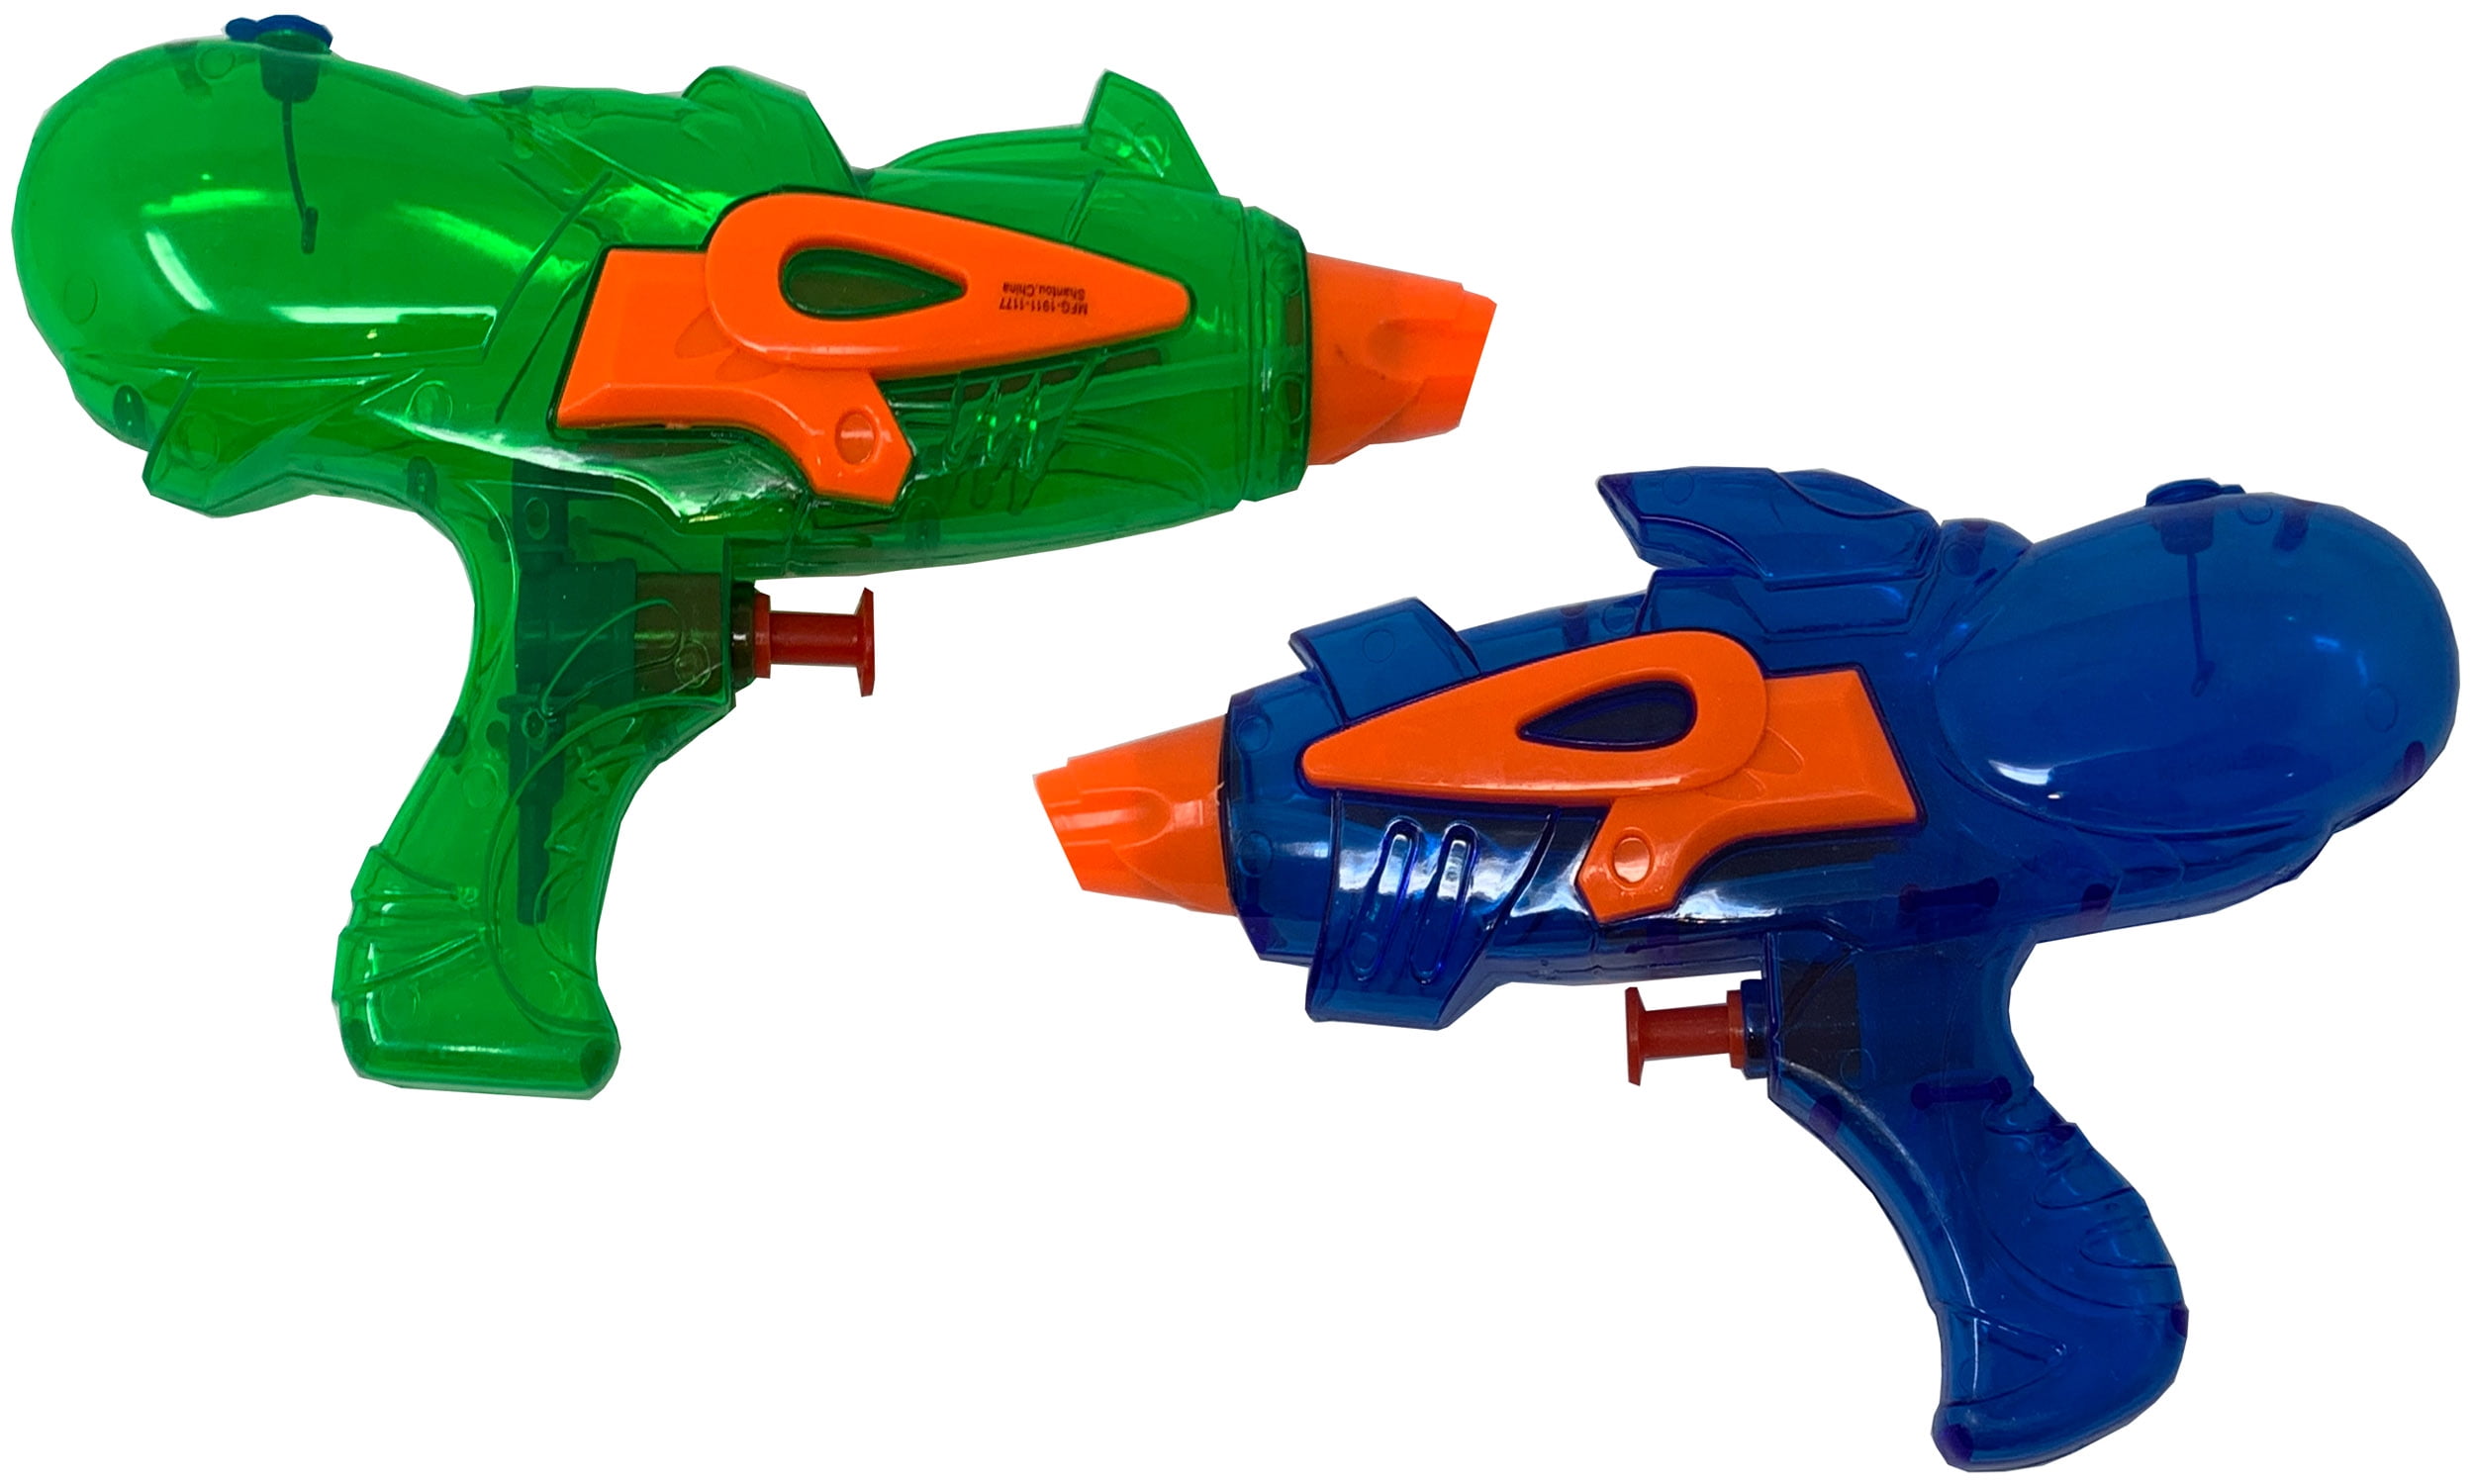 Water Guns for Kids & Adults,Dinosaur Water Blaster,Long-Range Shooting Water Pistol Toy for Pool Beach Yard Party Play Boys Girls